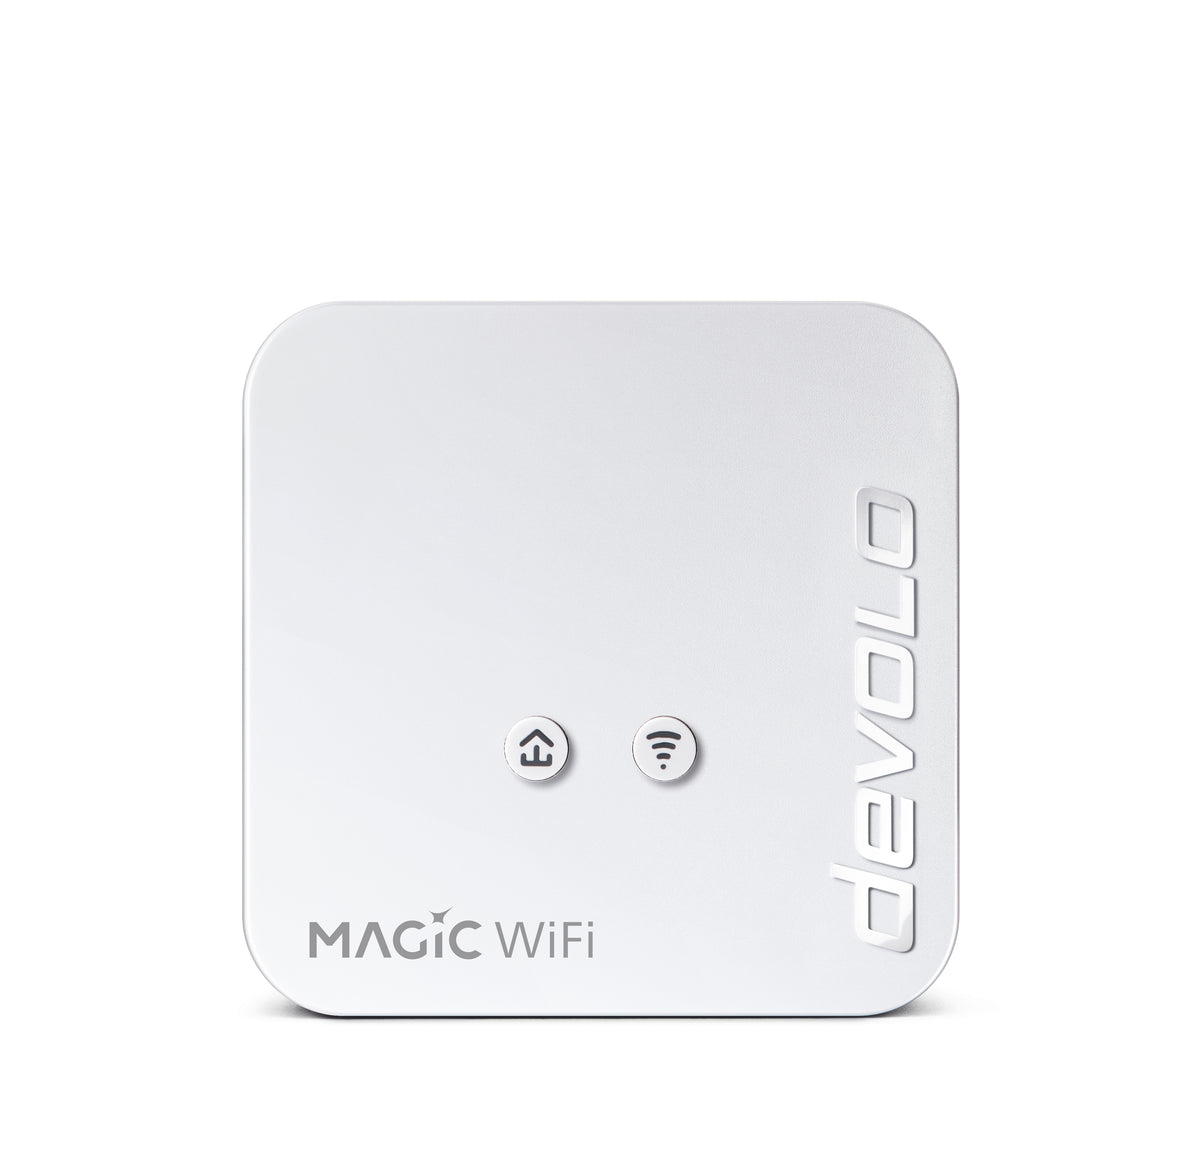 devolo Magic 1 WiFi mini, complemento Adap, Velocid. PLC hasta 1200 Mbps, Wi-Fi en malla con 1 puerto LAN - PT8559